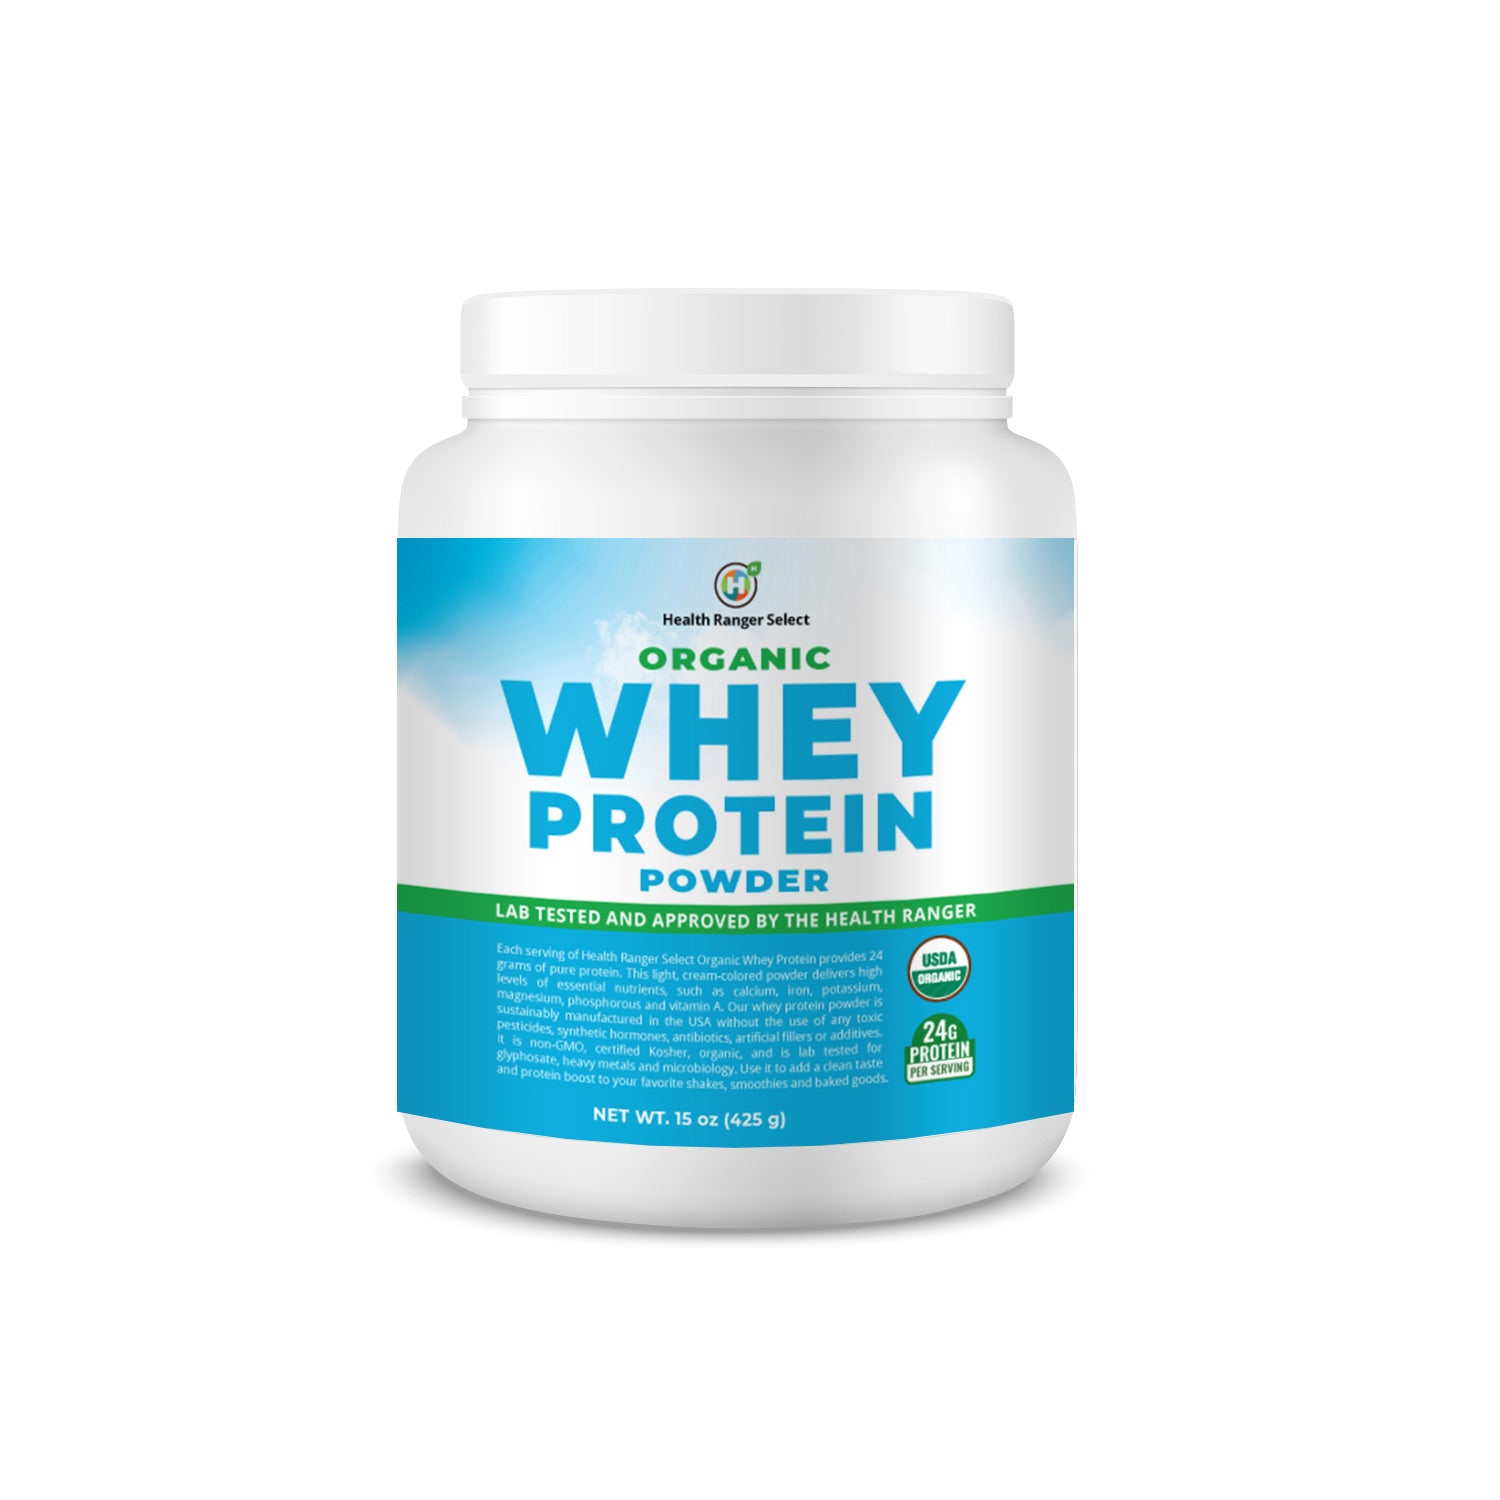 Organic Whey Protein Powder 15 oz (425g)